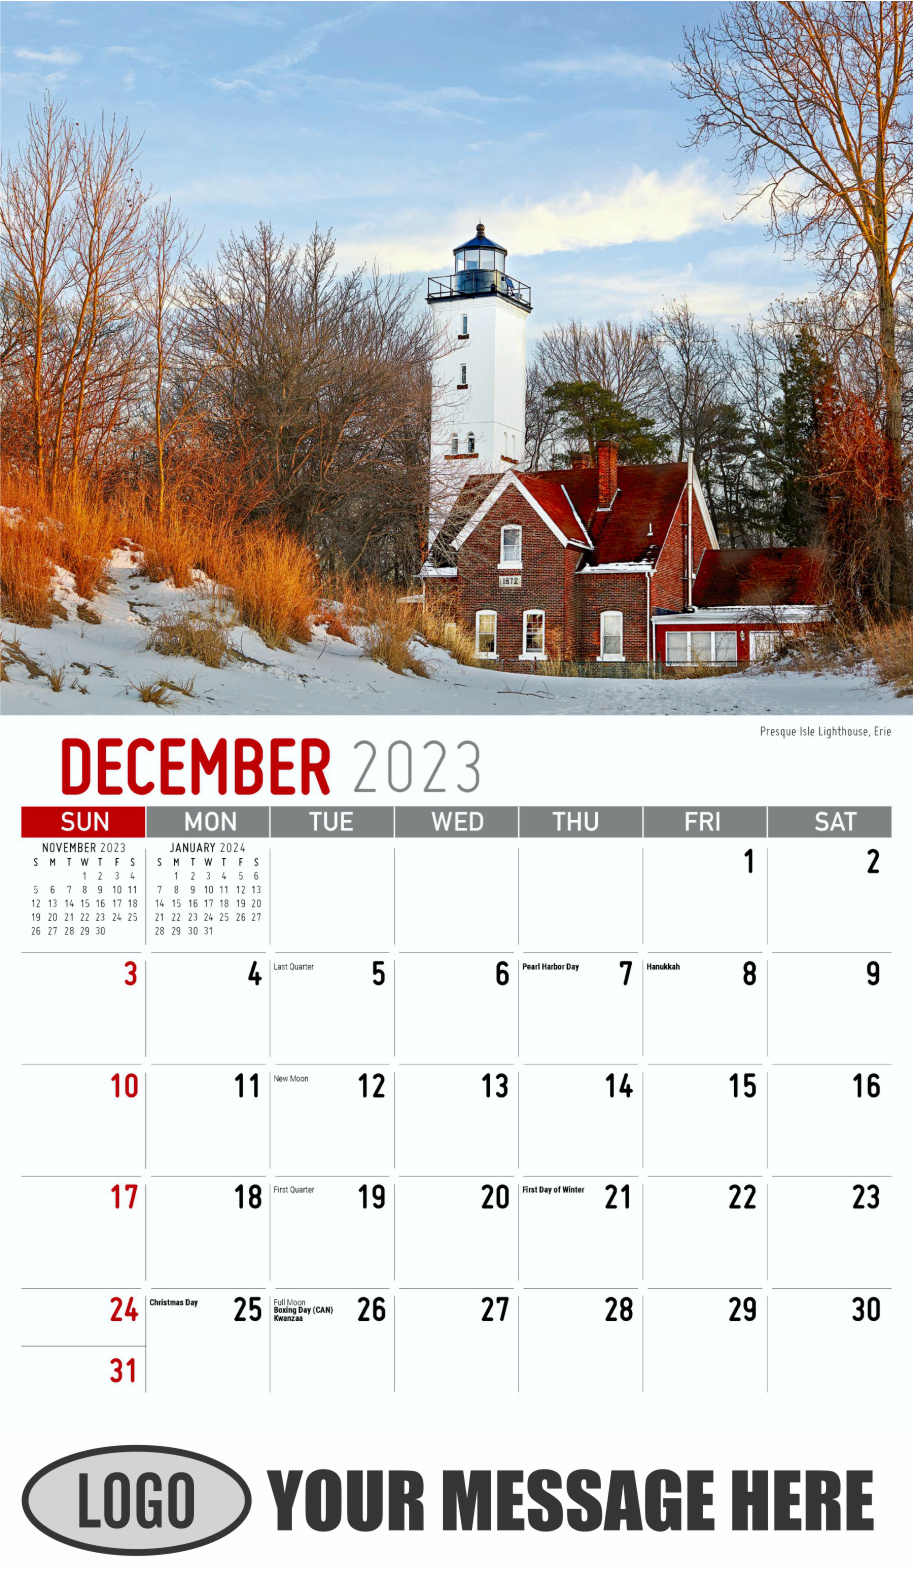 Scenes of Pennsylvania 2024 Business Promotion Calendar - December_a